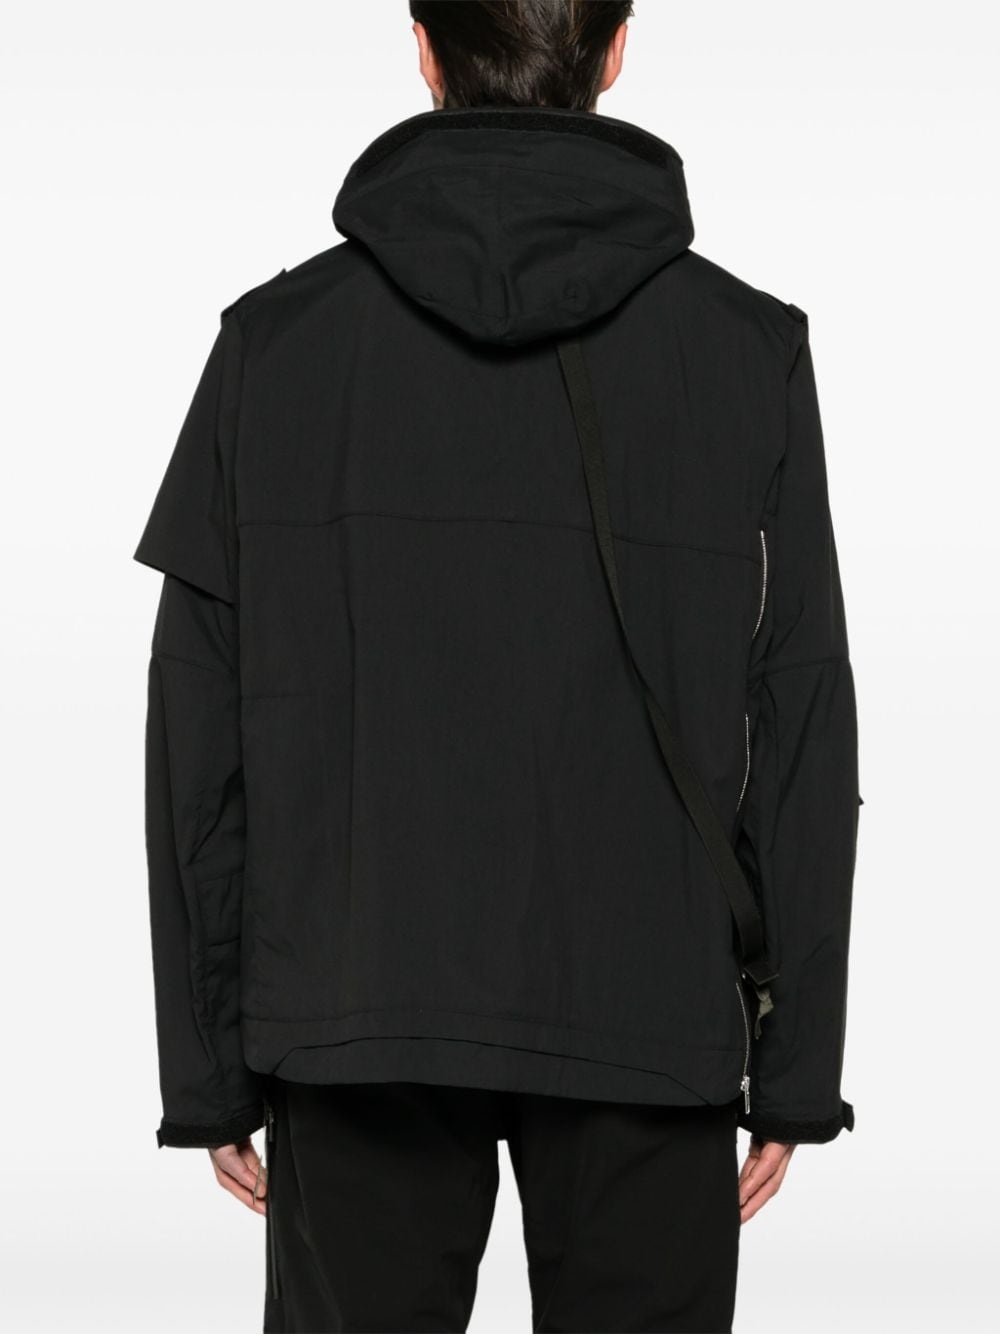 Encapsulated Interops hooded jacket - 4